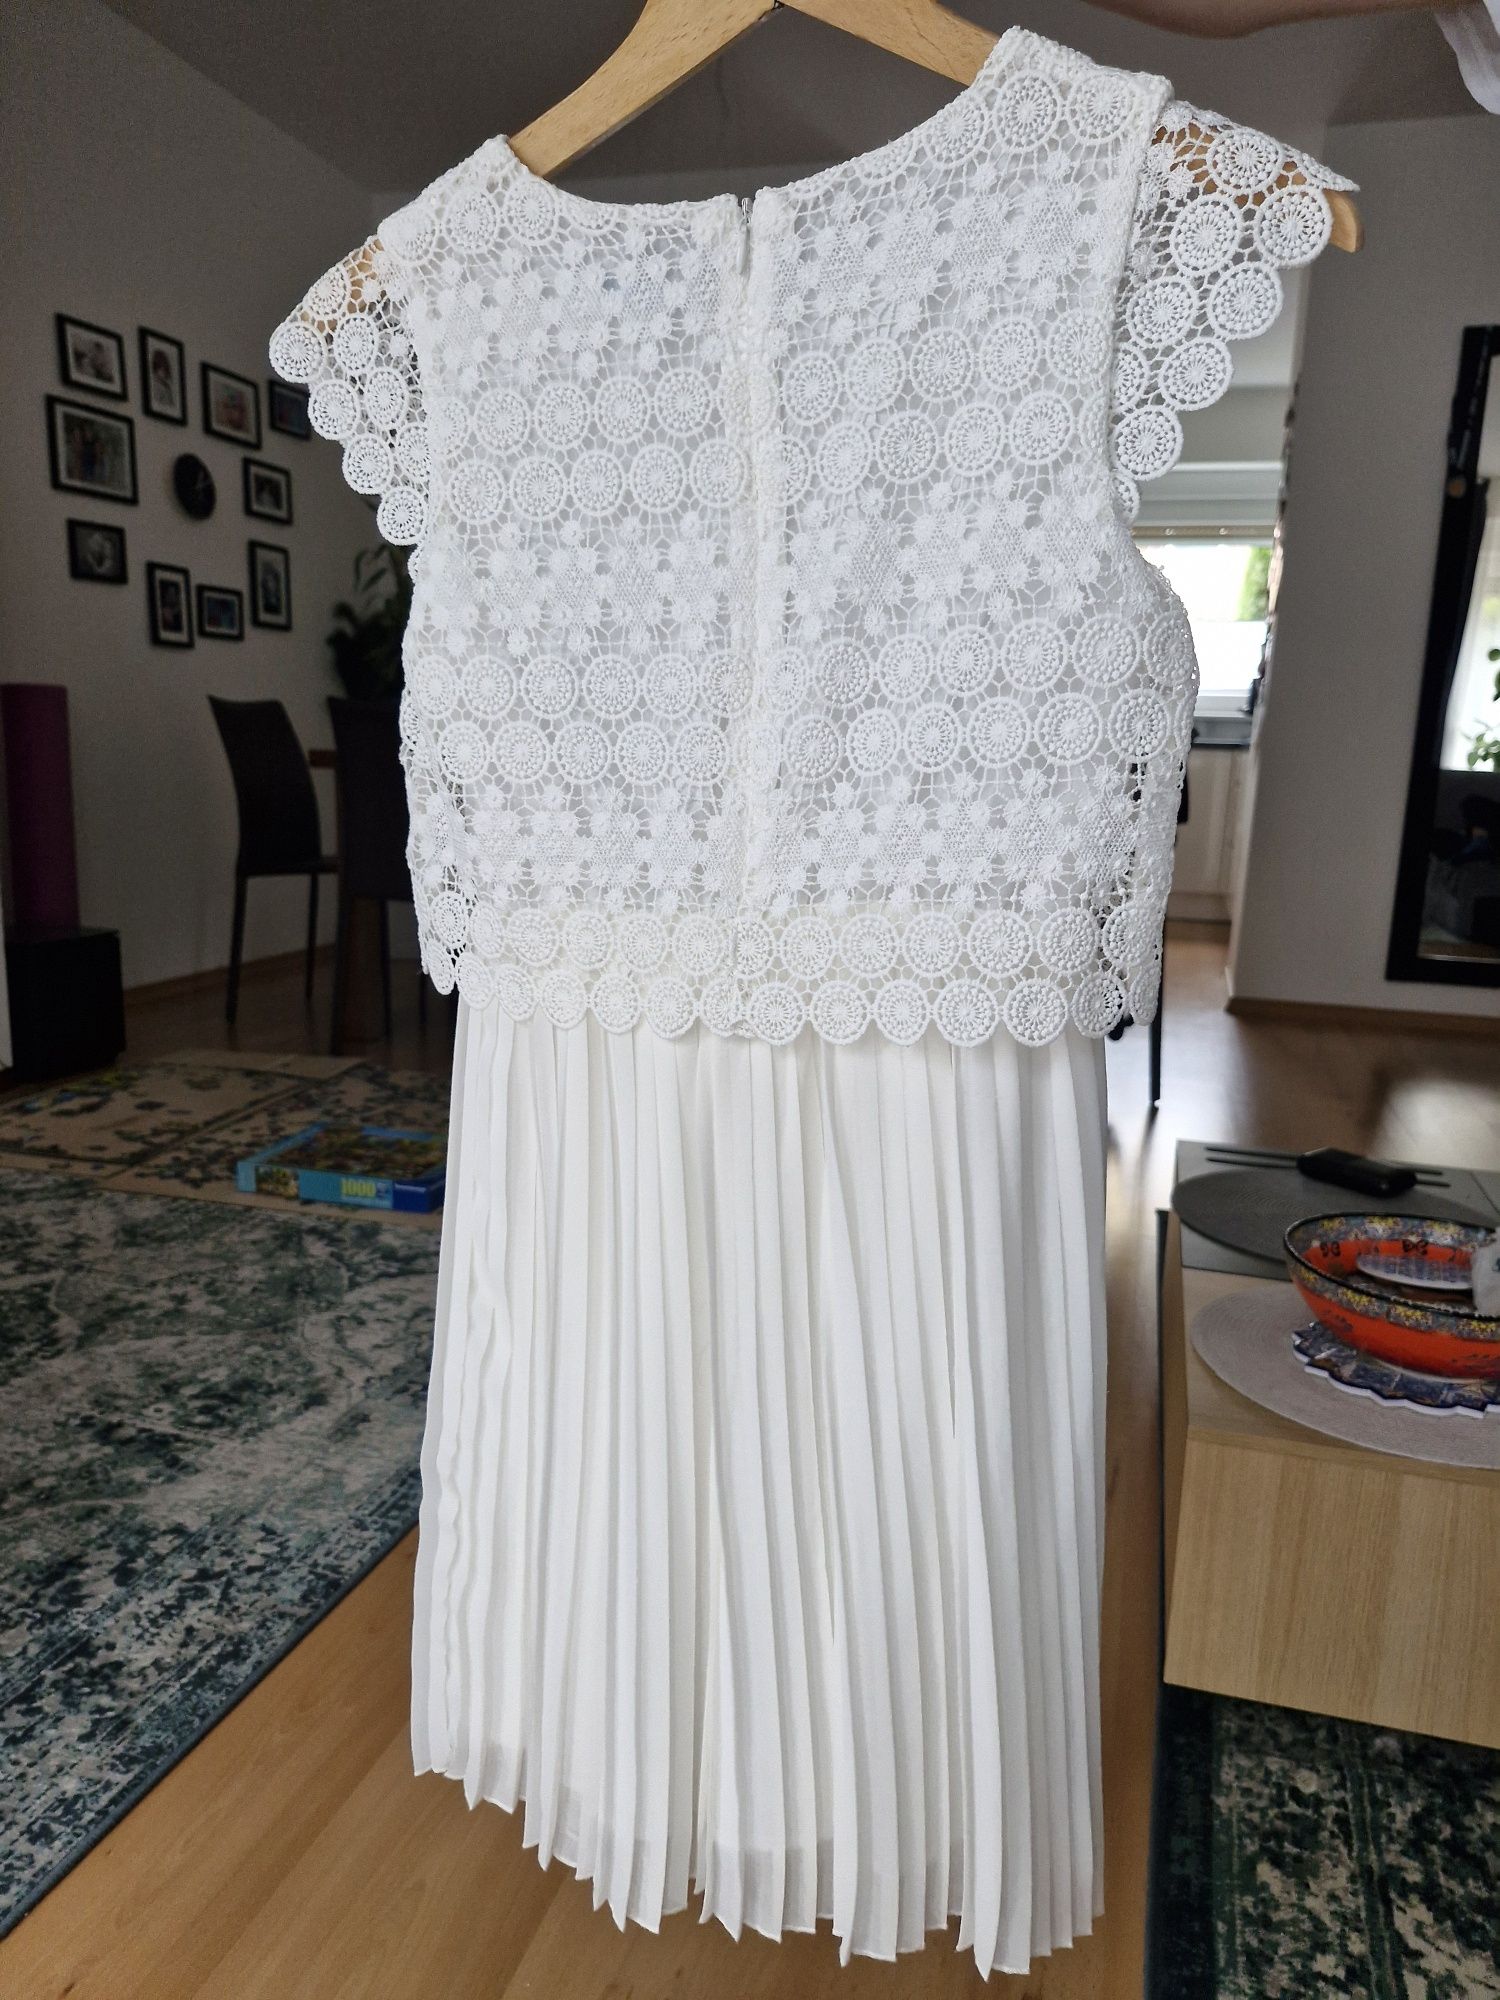 Komplet Mayoral: sukienka + sweterek, r. 152 cm. Komunia. Okazja!